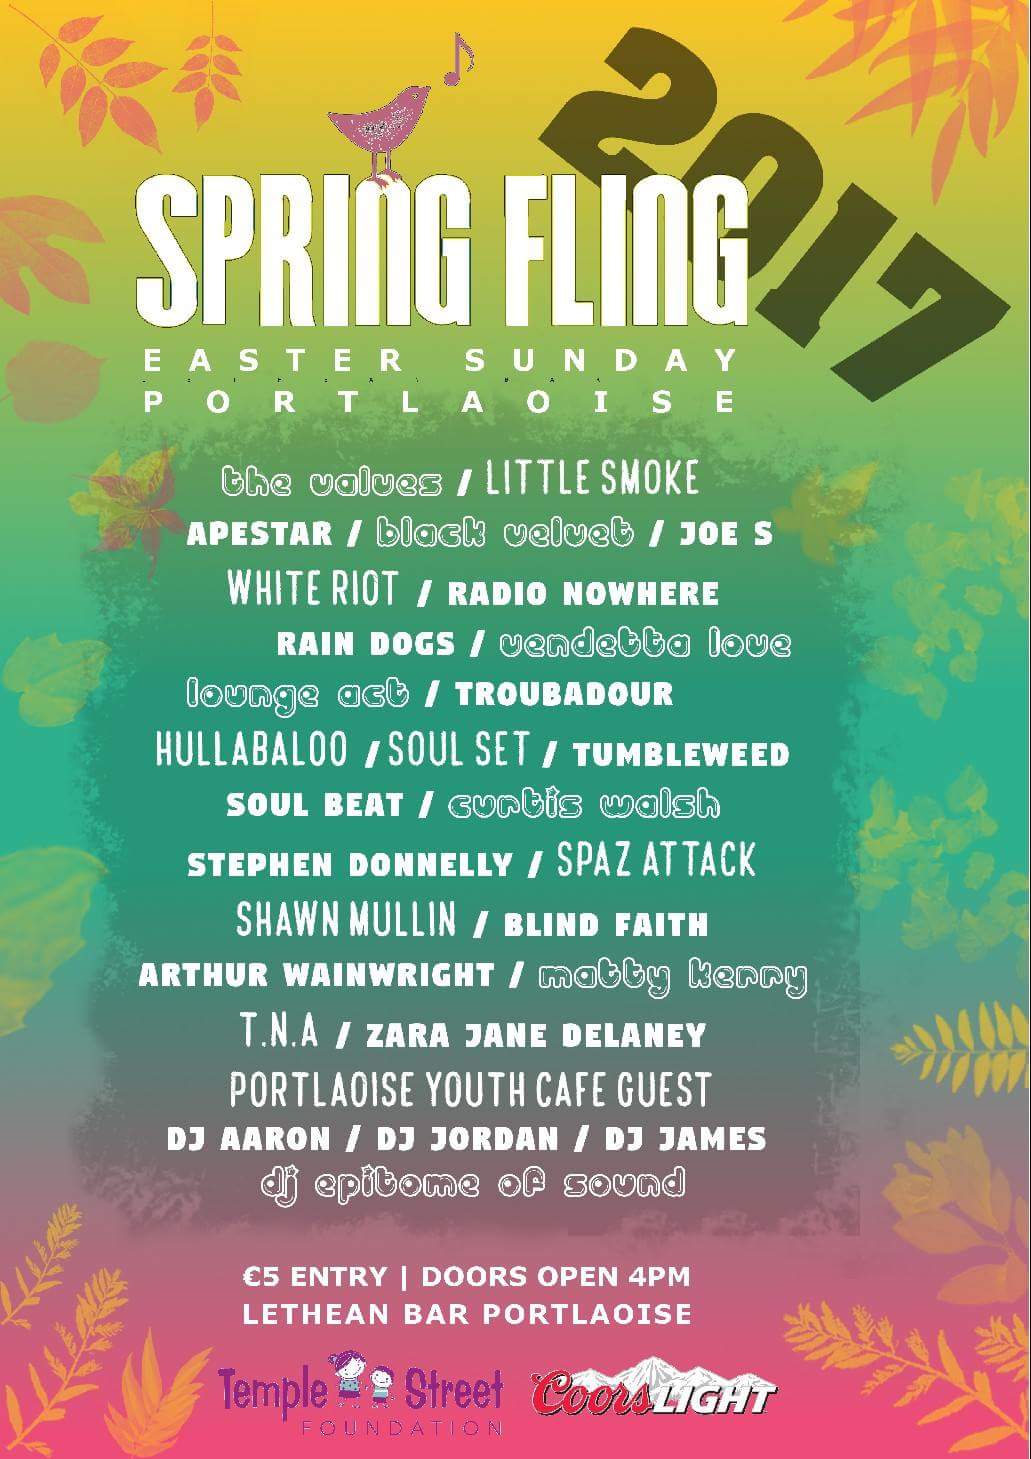 Portlaoise bar hosts their annual Spring Fling music festival - Laois Today